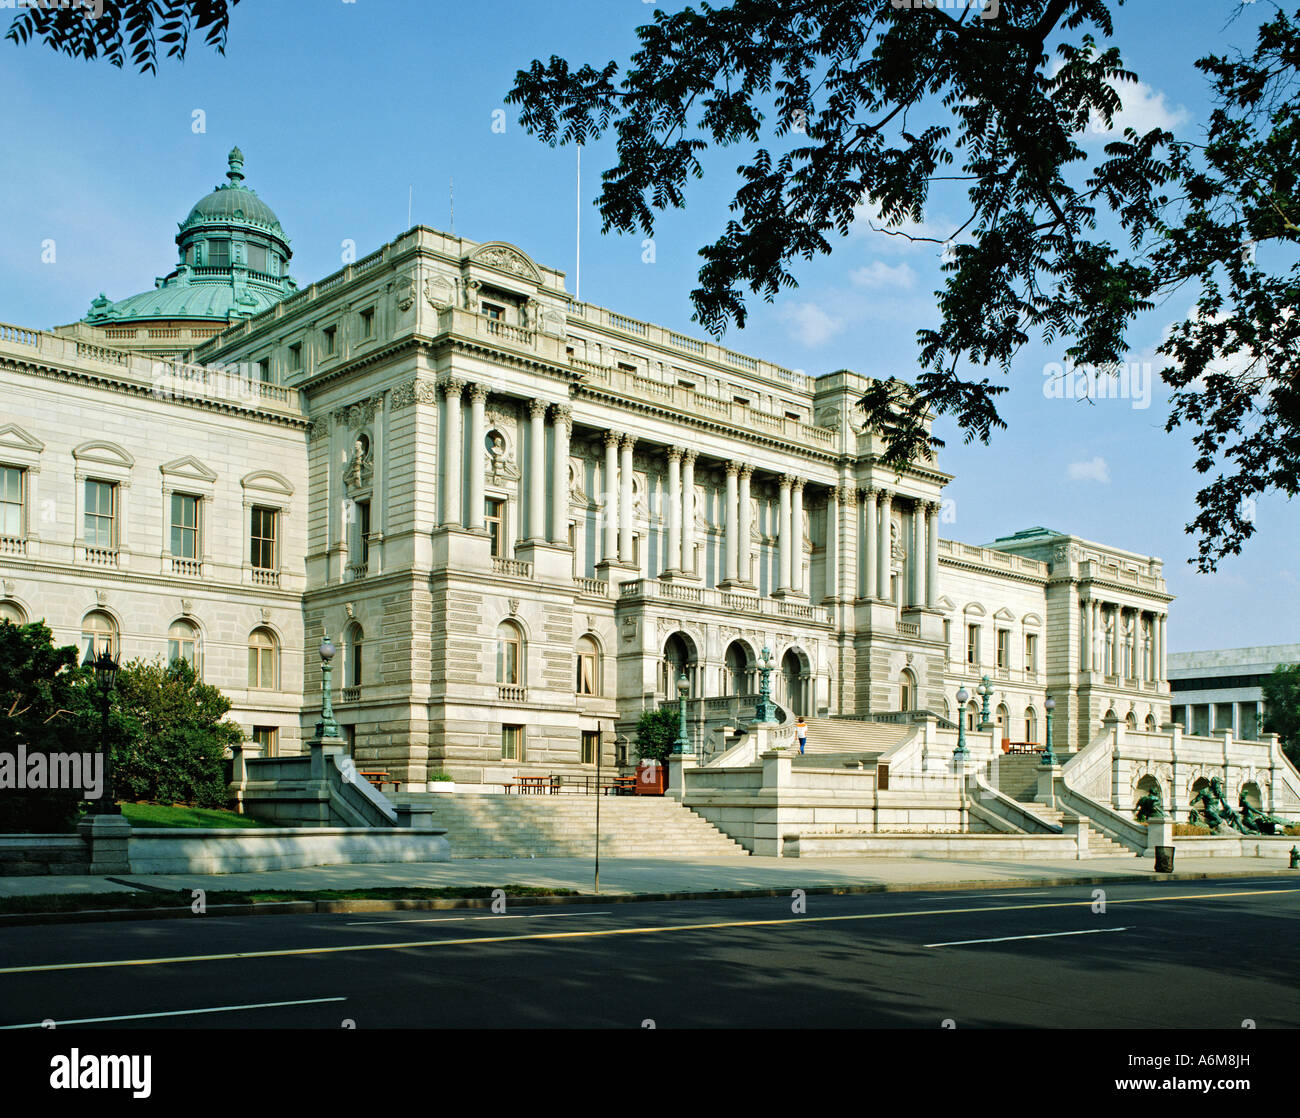 USA WASHINGTON DC LIBRARY OF CONGRESS Stock Photo